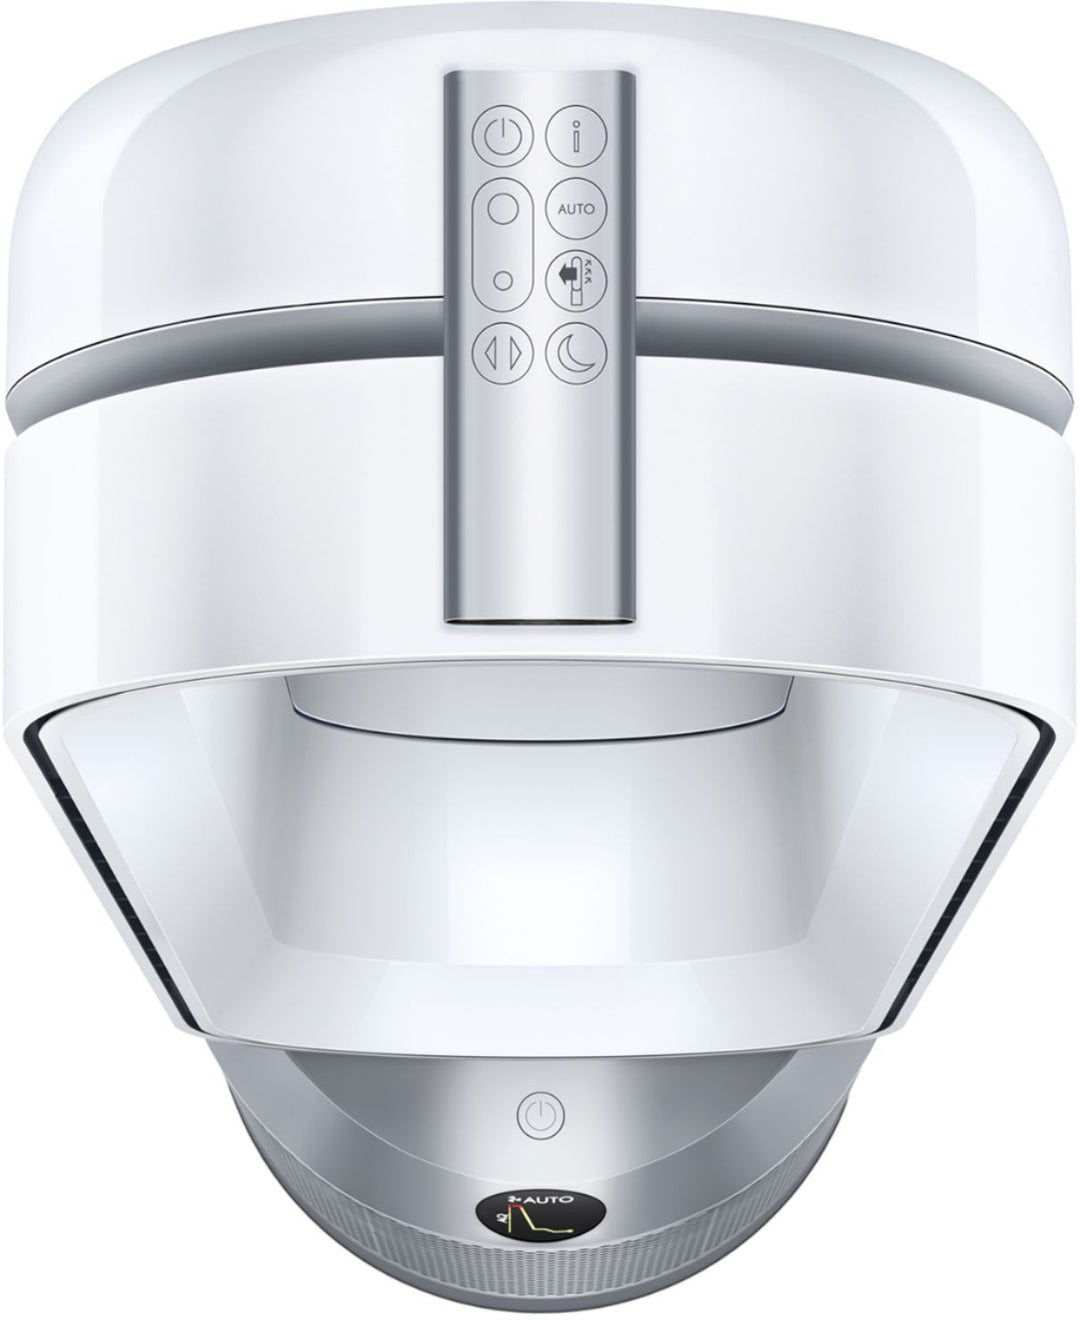 Dyson - Purifier Cool - TP07 - Smart Air Purifier and Fan - White/Silver_9